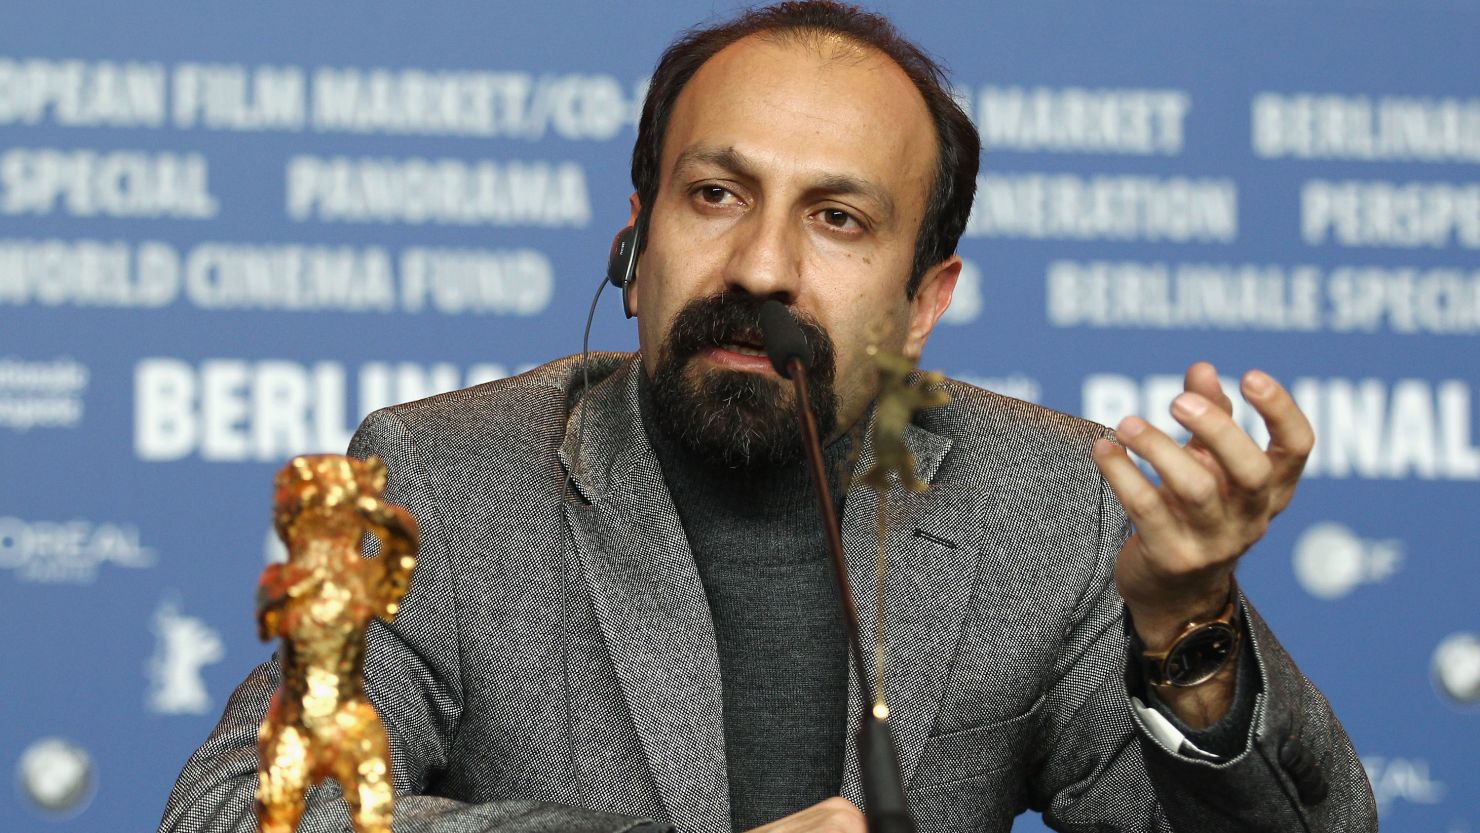  Asghar Farhadi speaks after winning the Golden Bear prize for his film, "A Separation," at the Berlin International Film Festival.